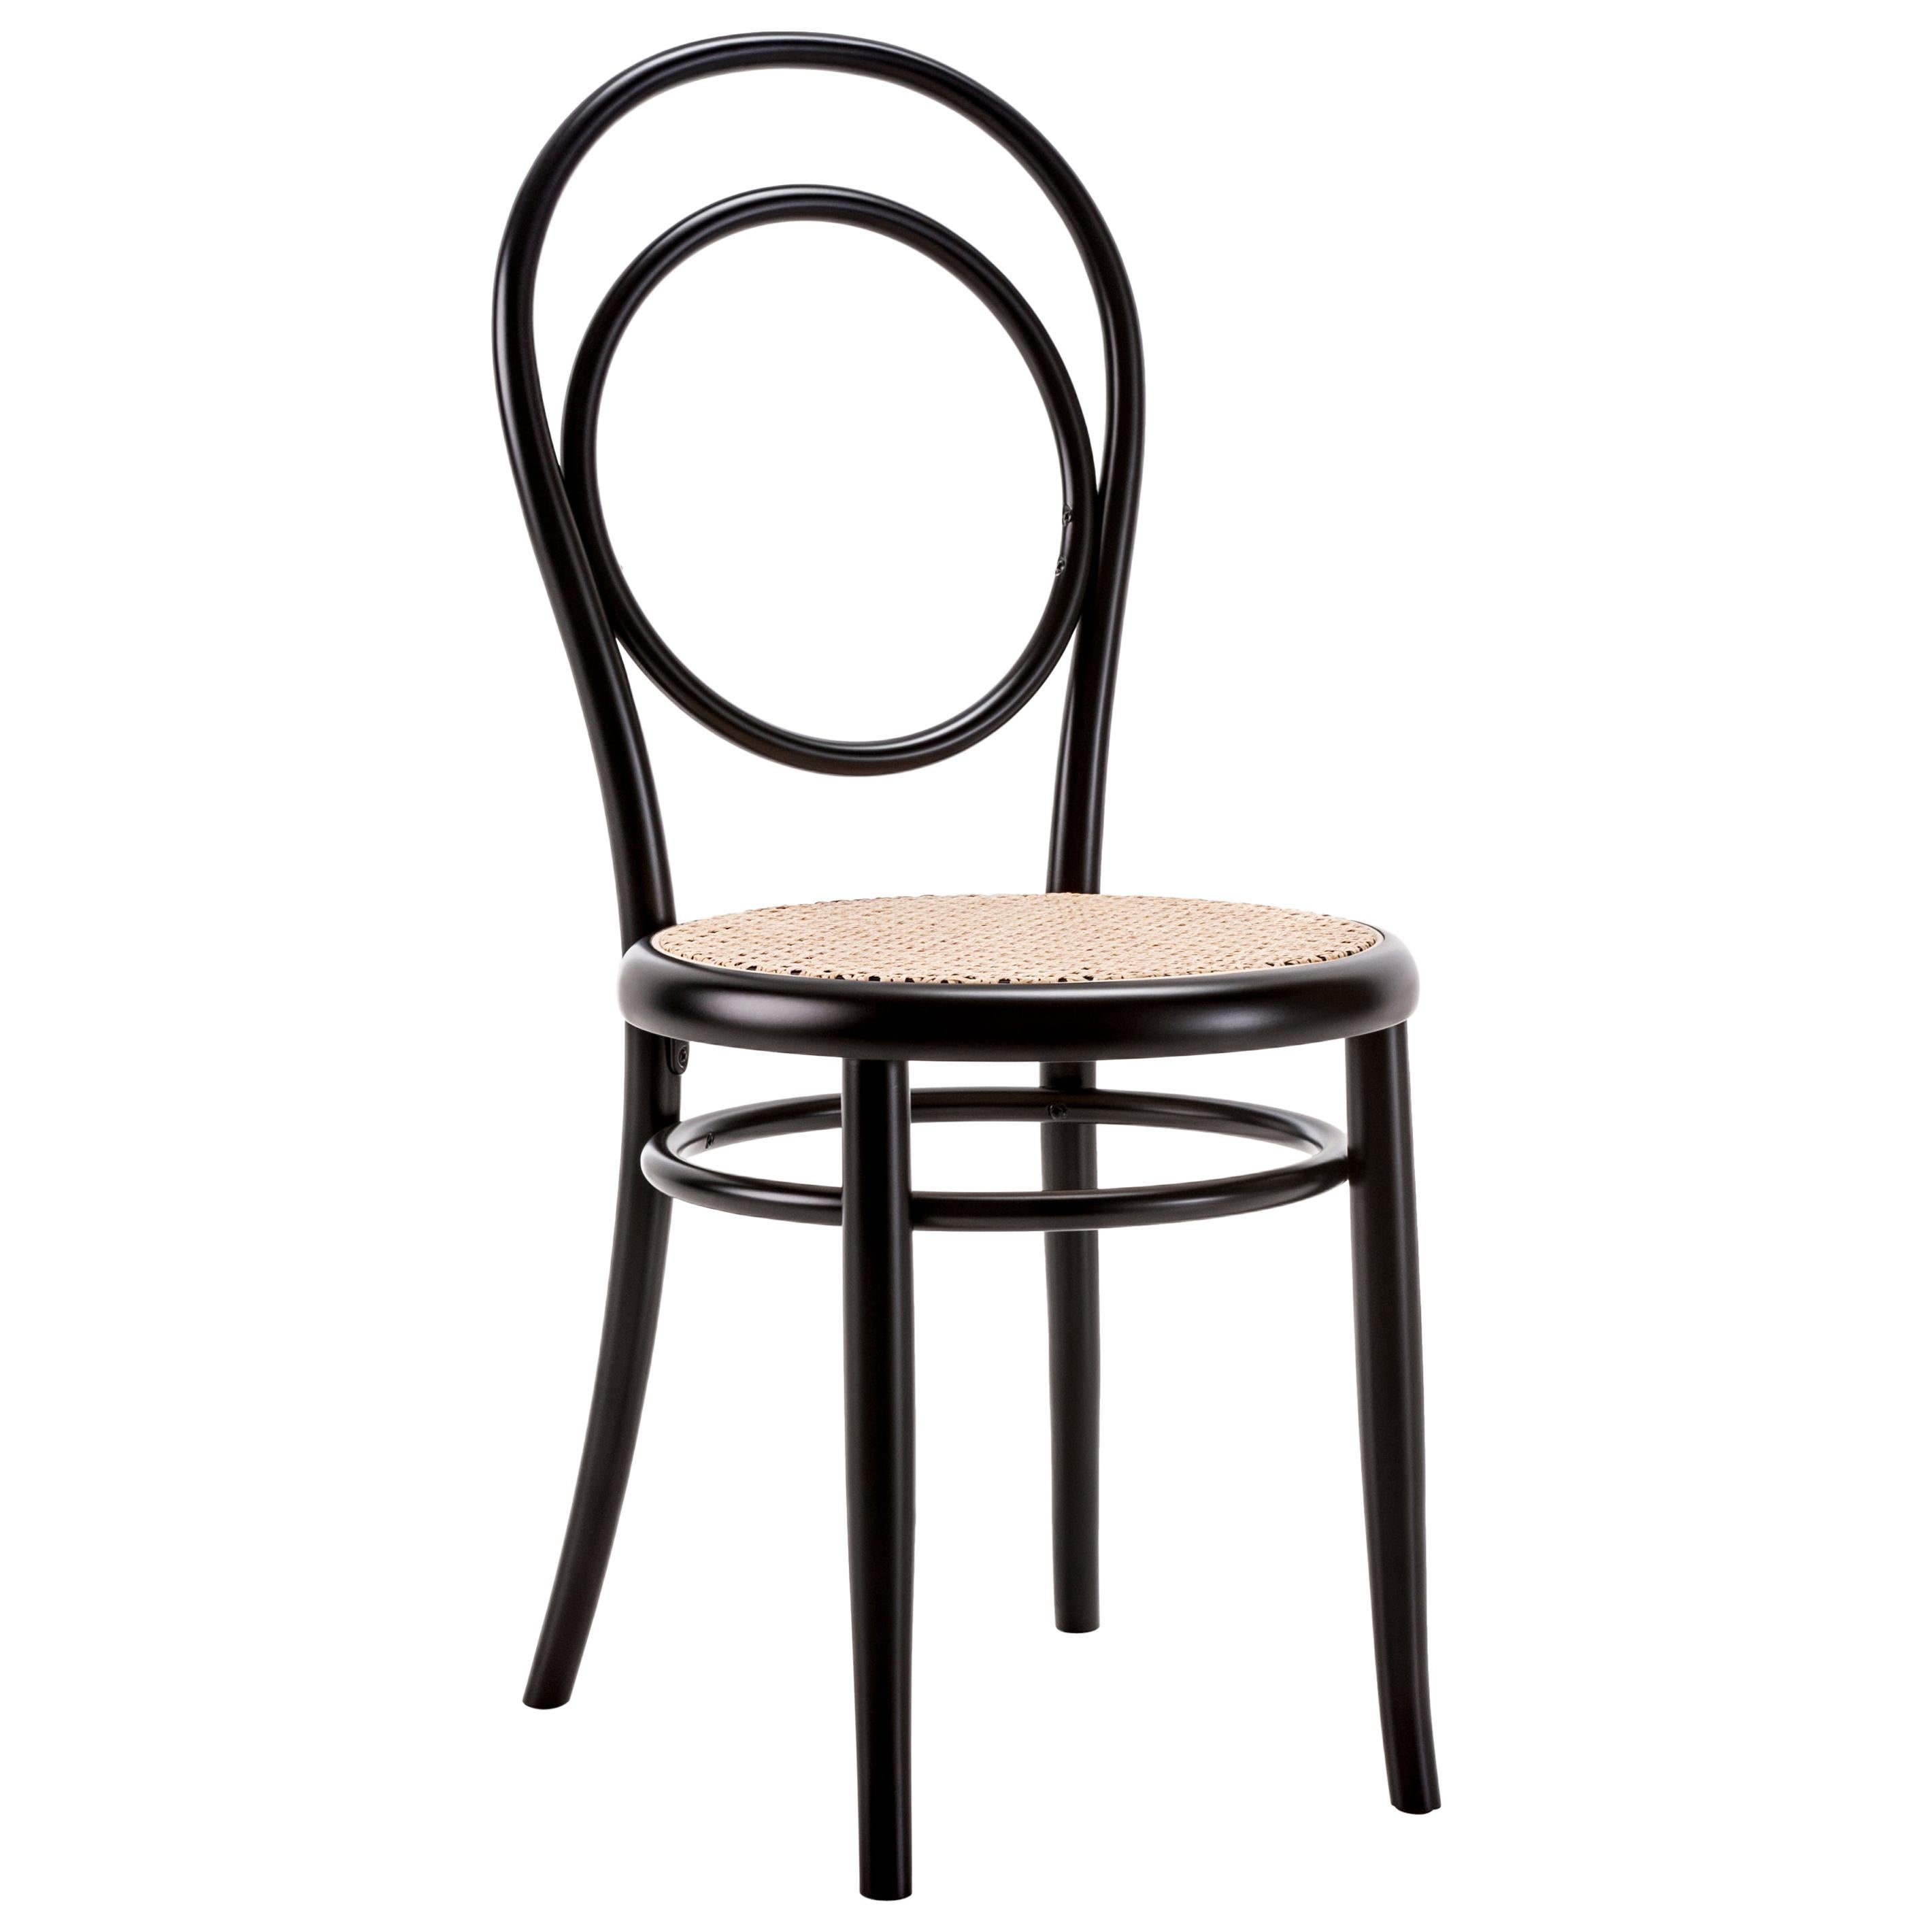 Gebrüder Thonet Vienna GmbH N.14 Perforated Chair in Black with Plywood Seat